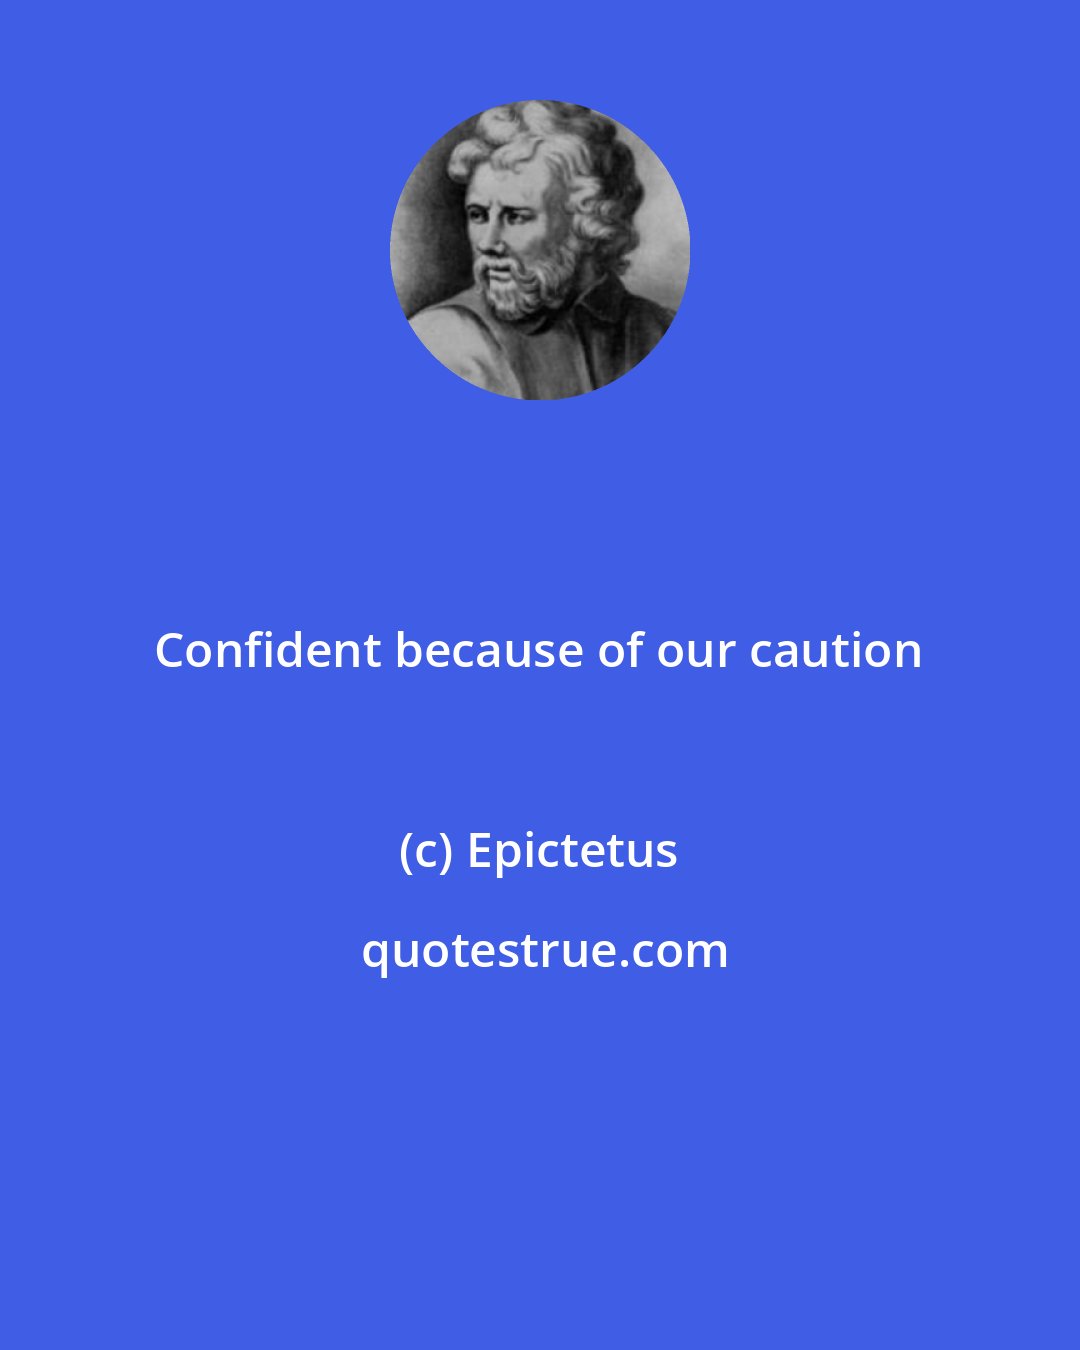 Epictetus: Confident because of our caution